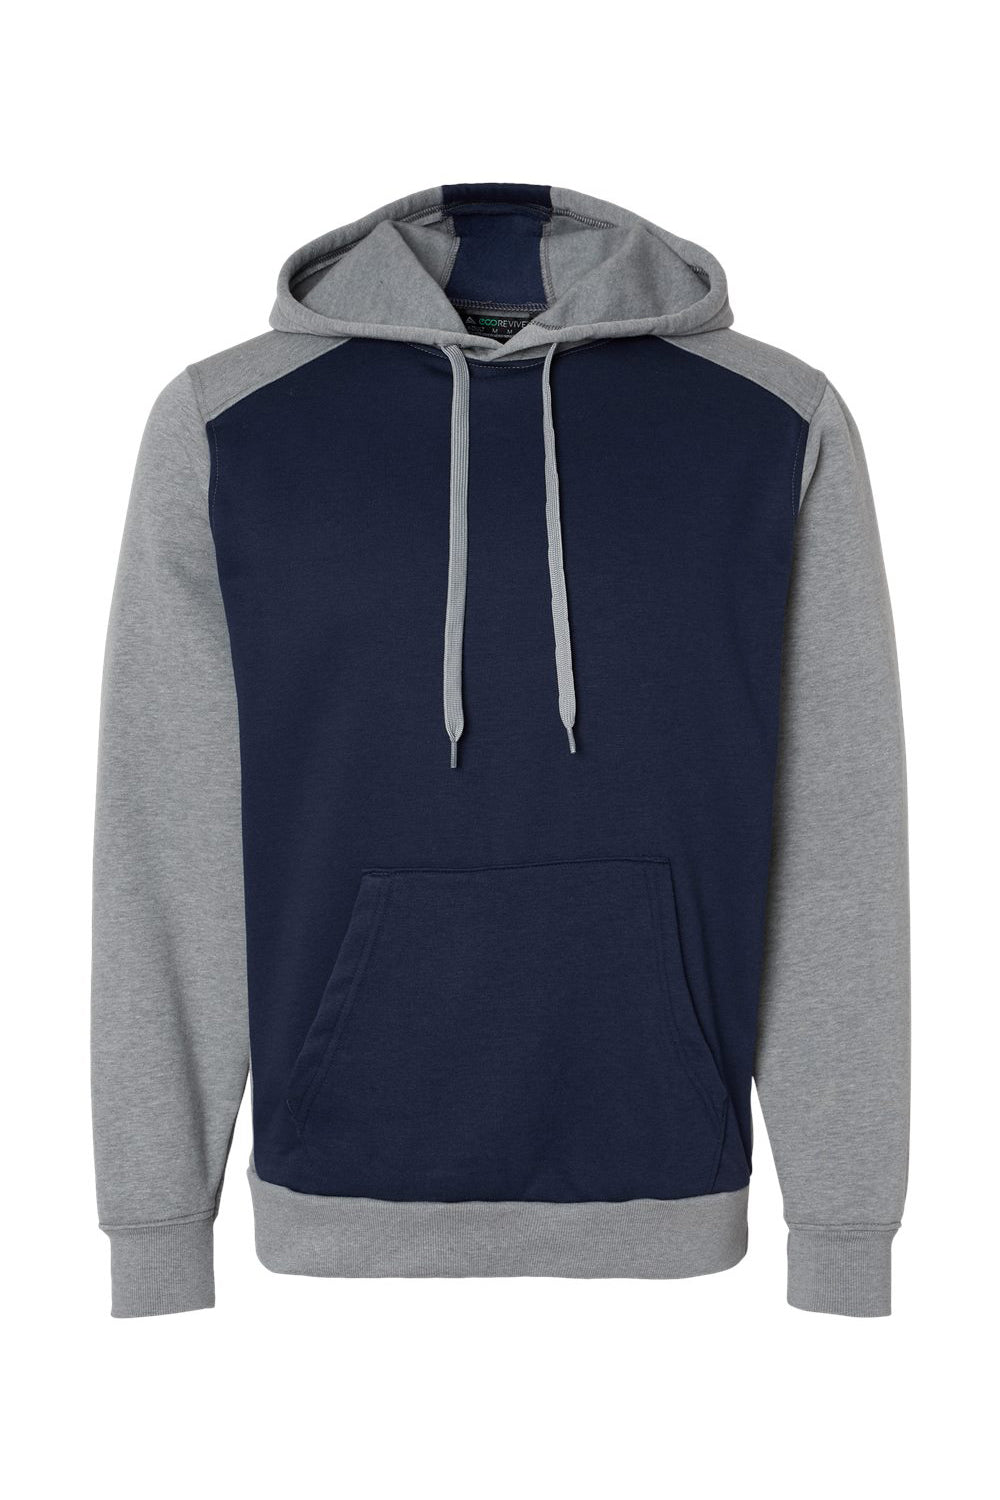 Augusta Sportswear 6865 Mens Eco Revive 3 Season Fleece Hooded Sweatshirt Hoodie Navy Blue/Heather Grey Flat Front